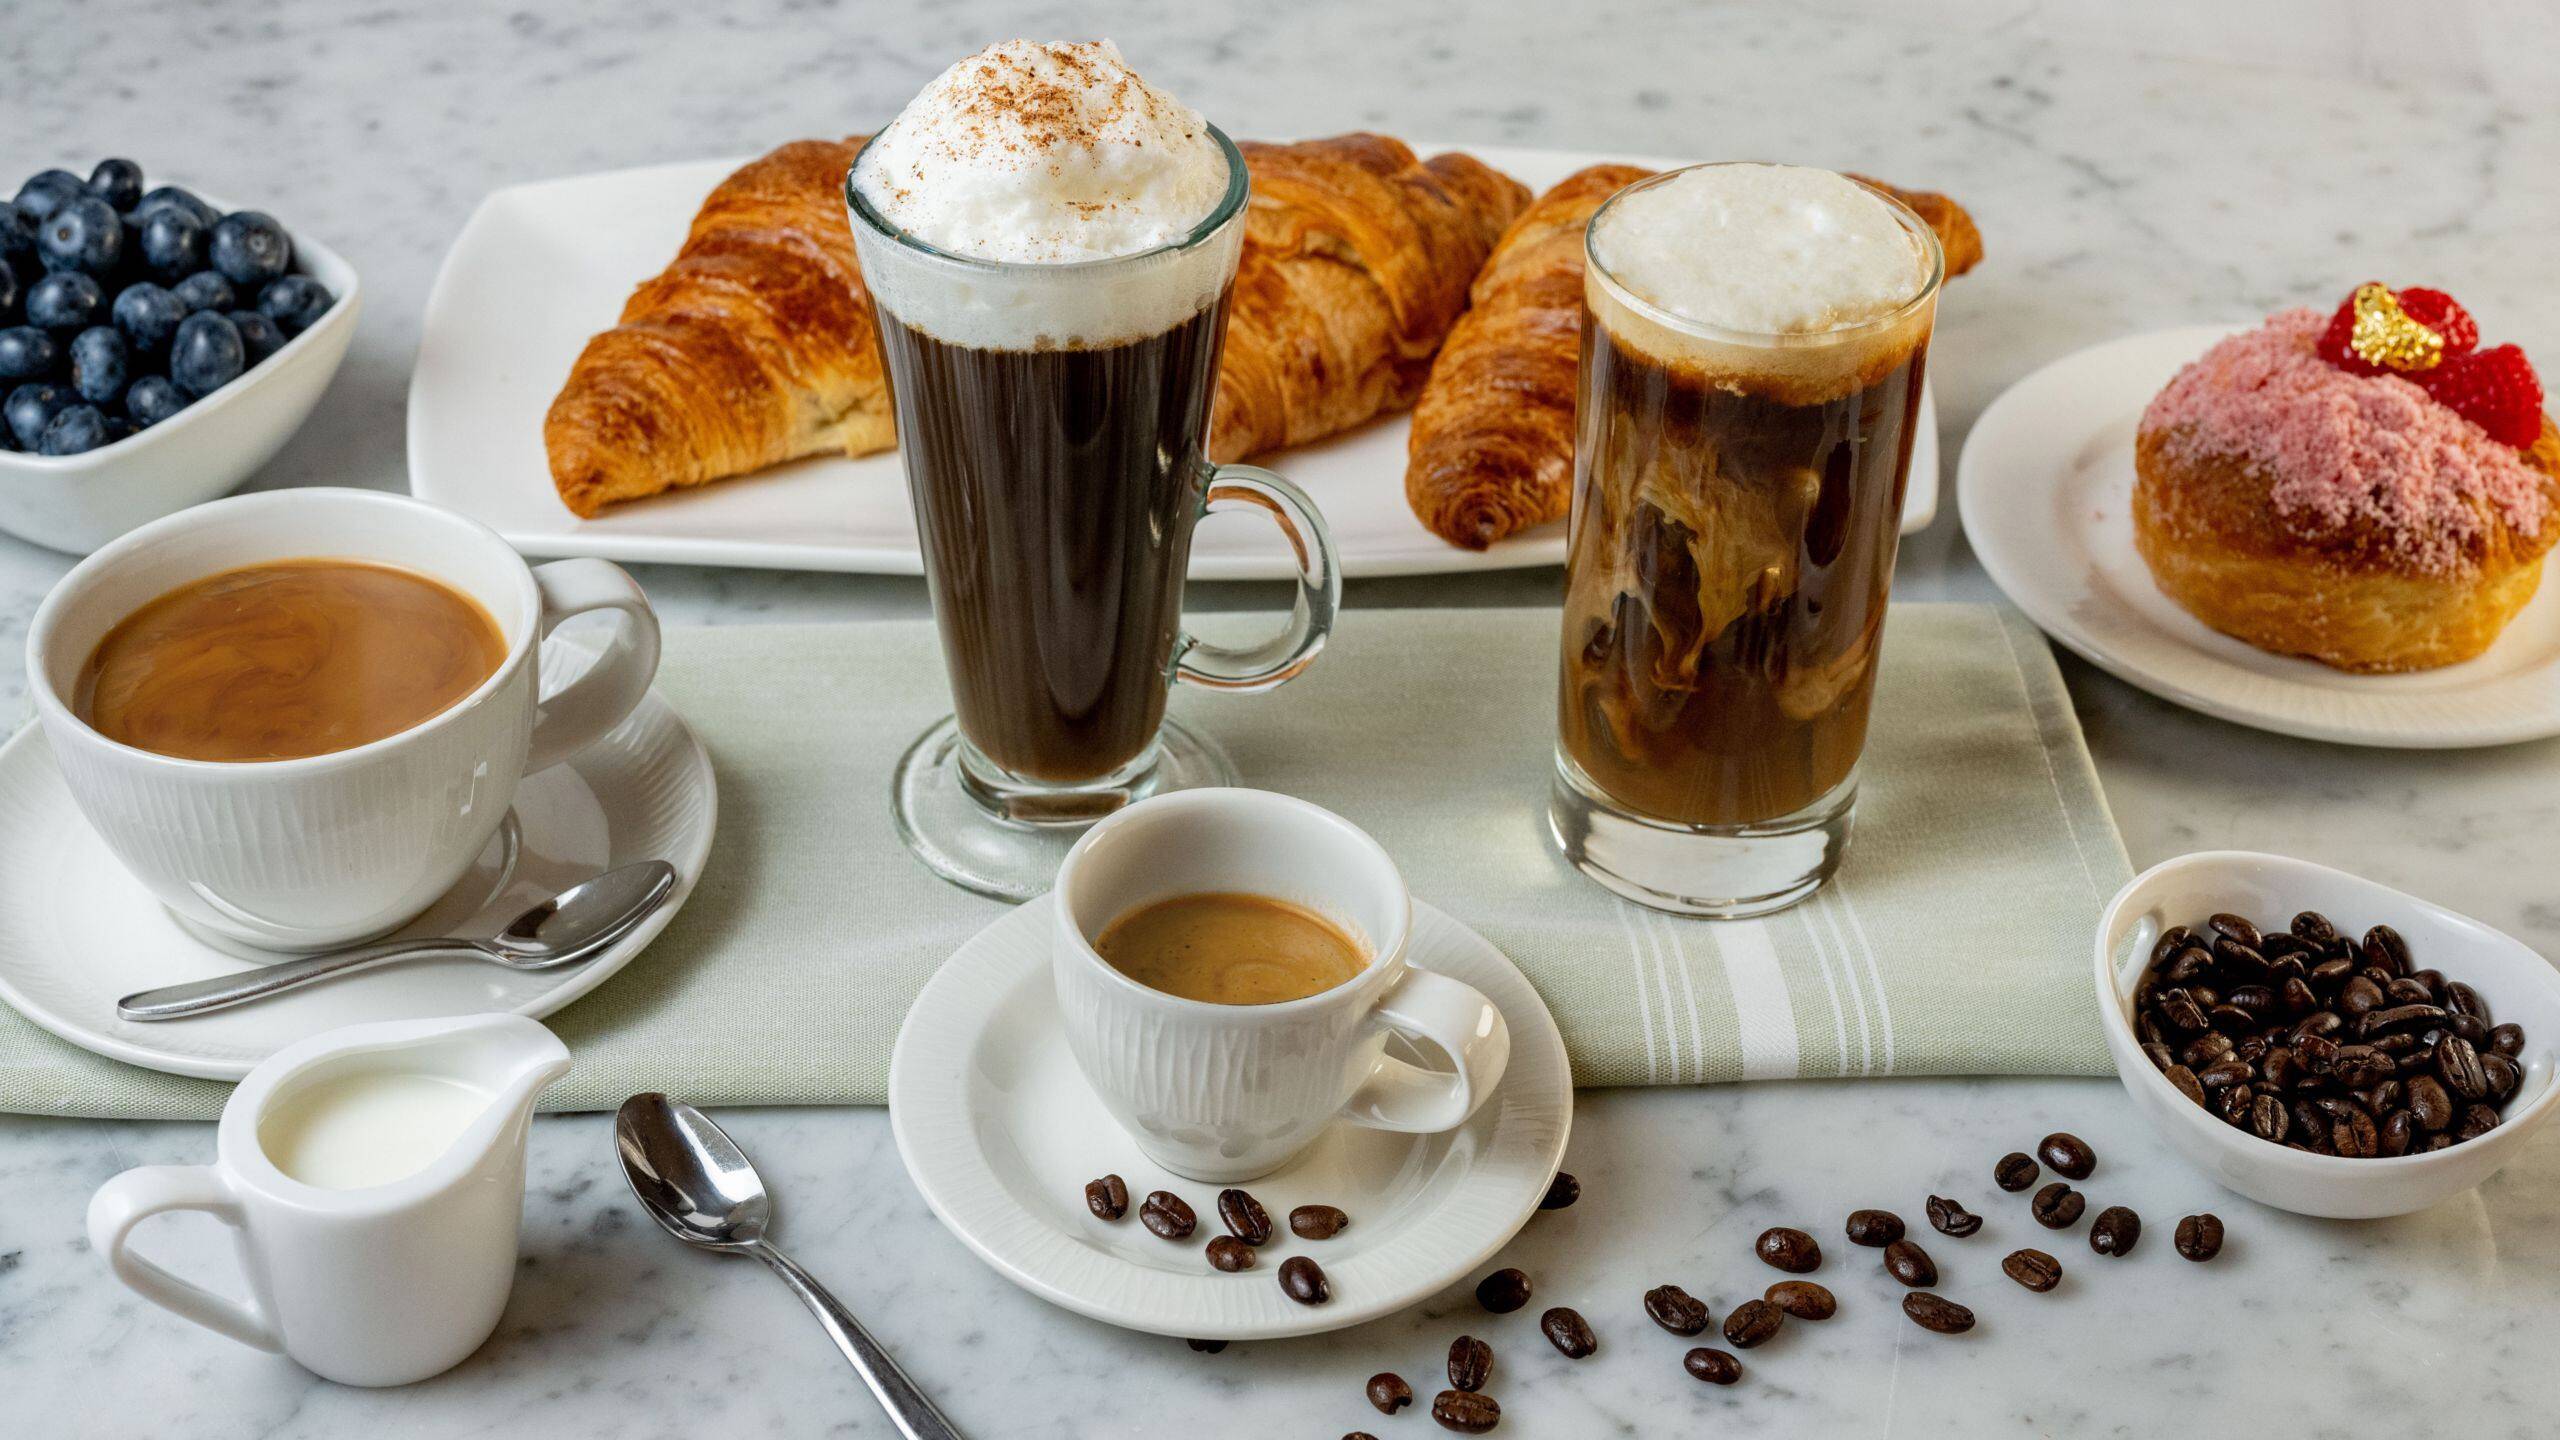 Full menu unveiled for 'Carousel Coffee' coming soon to Disney's BoardWalk Resort